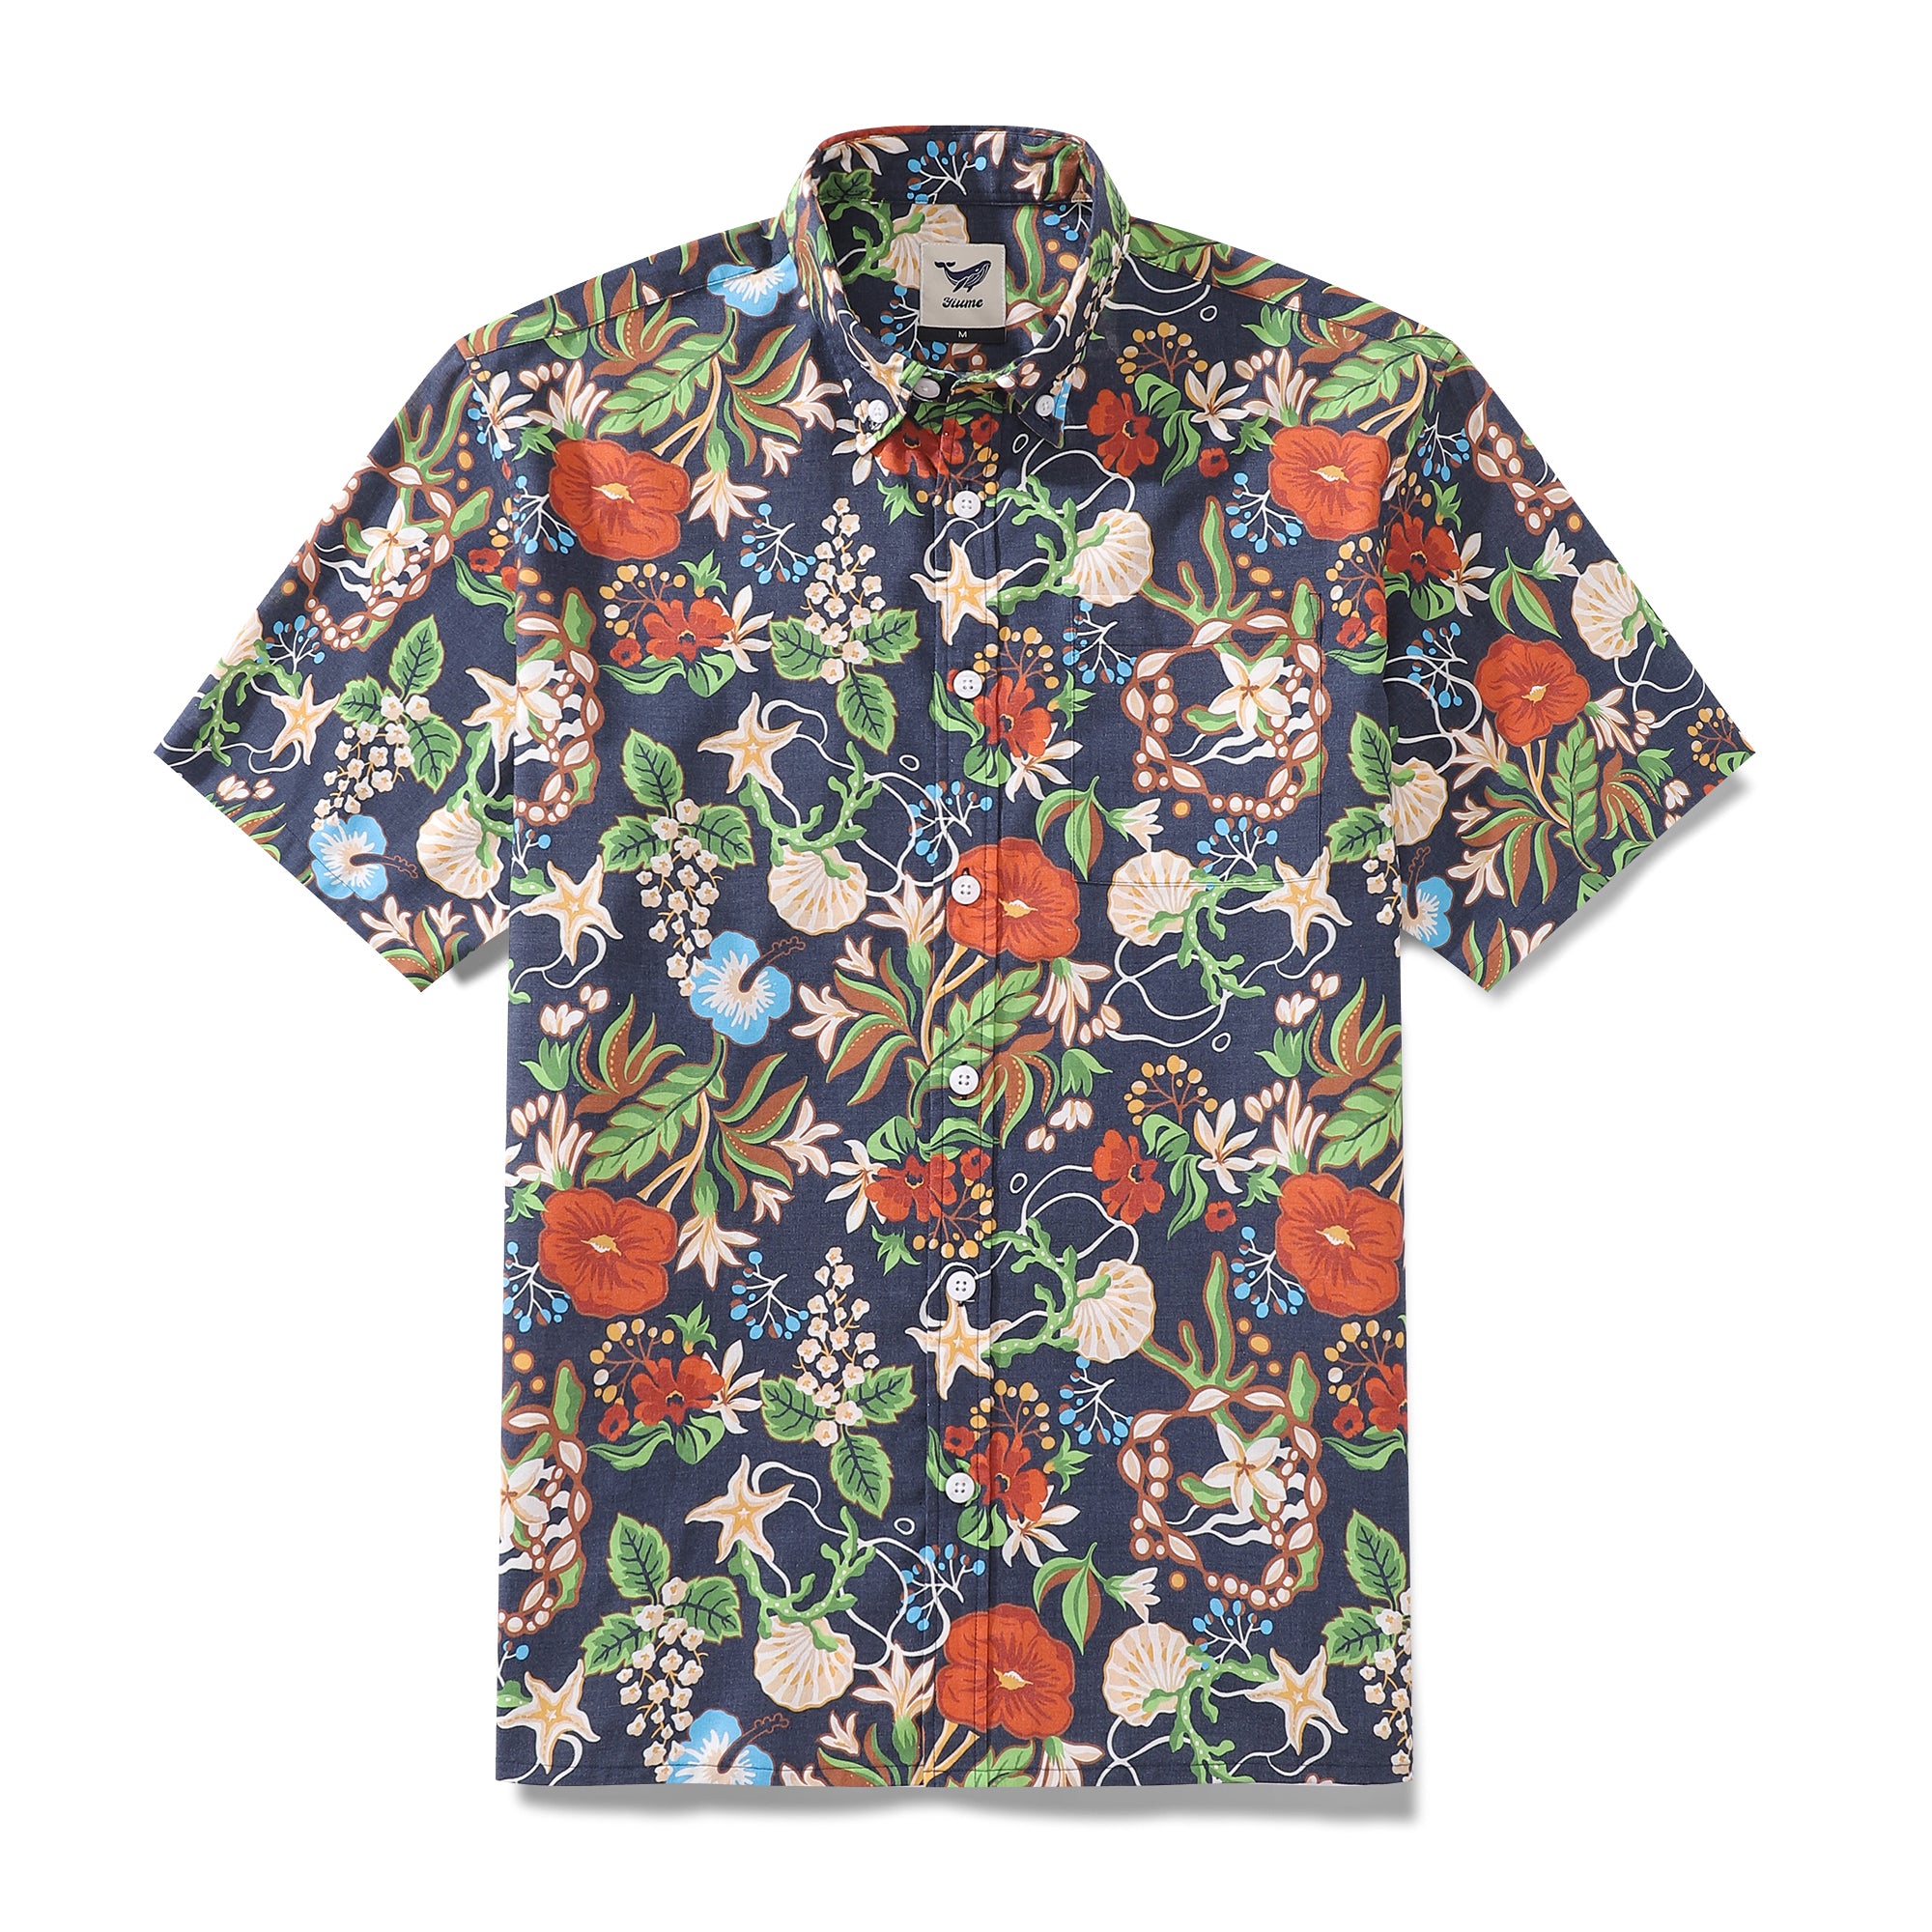 Men's Hawaiian Shirt Treasure Garden Print 1940s Vintage Short Sleeve Aloha Shirt